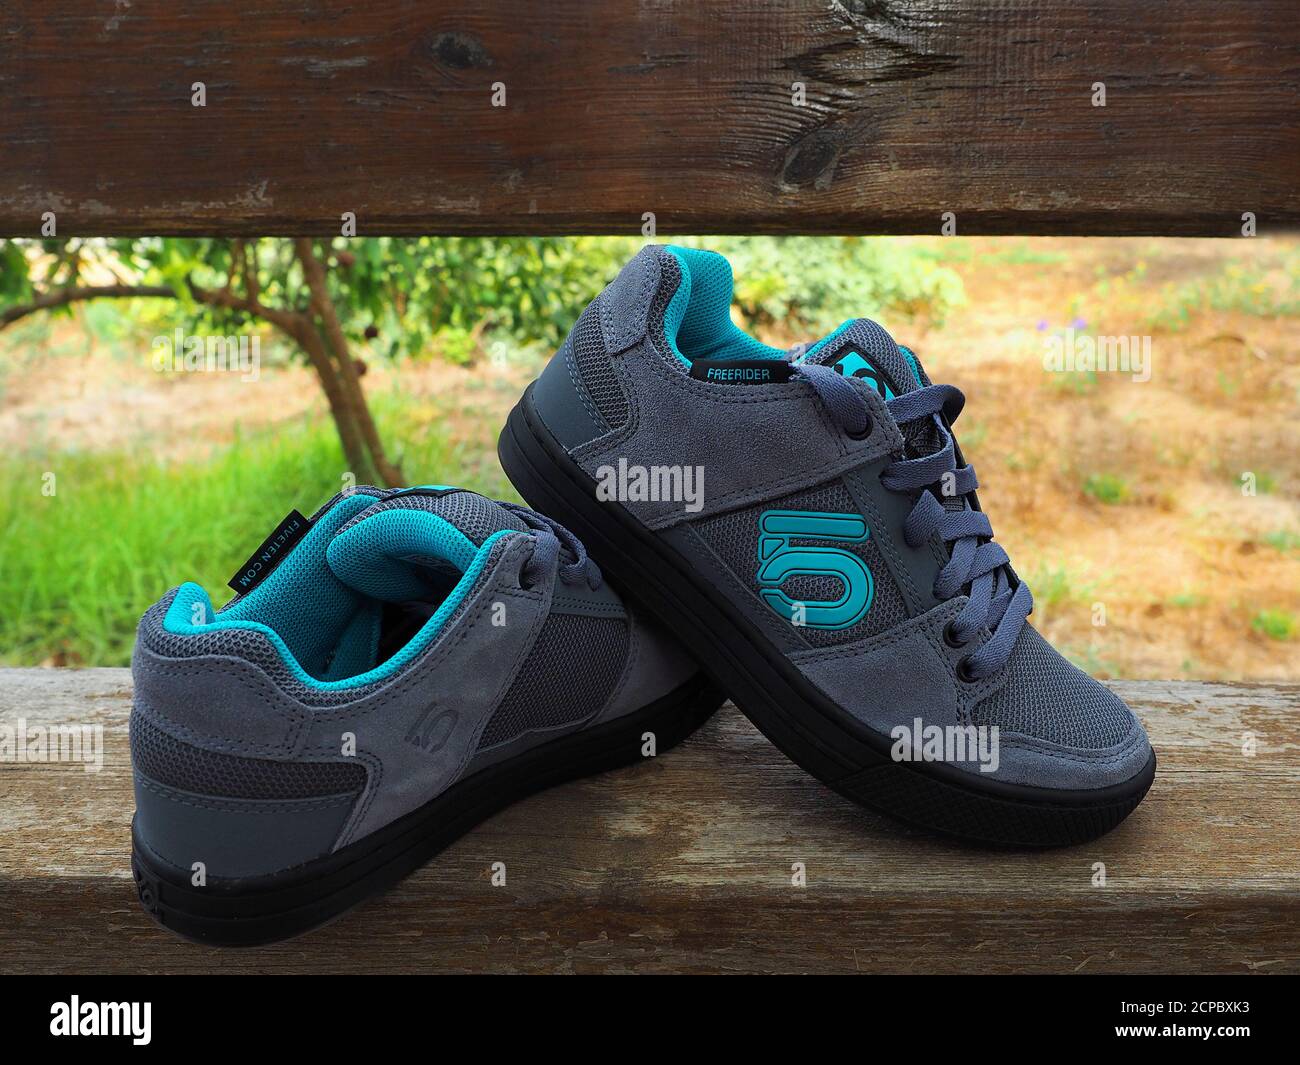 Adidas Five Ten Freerider - donna mountain bike scarpe Foto stock - Alamy